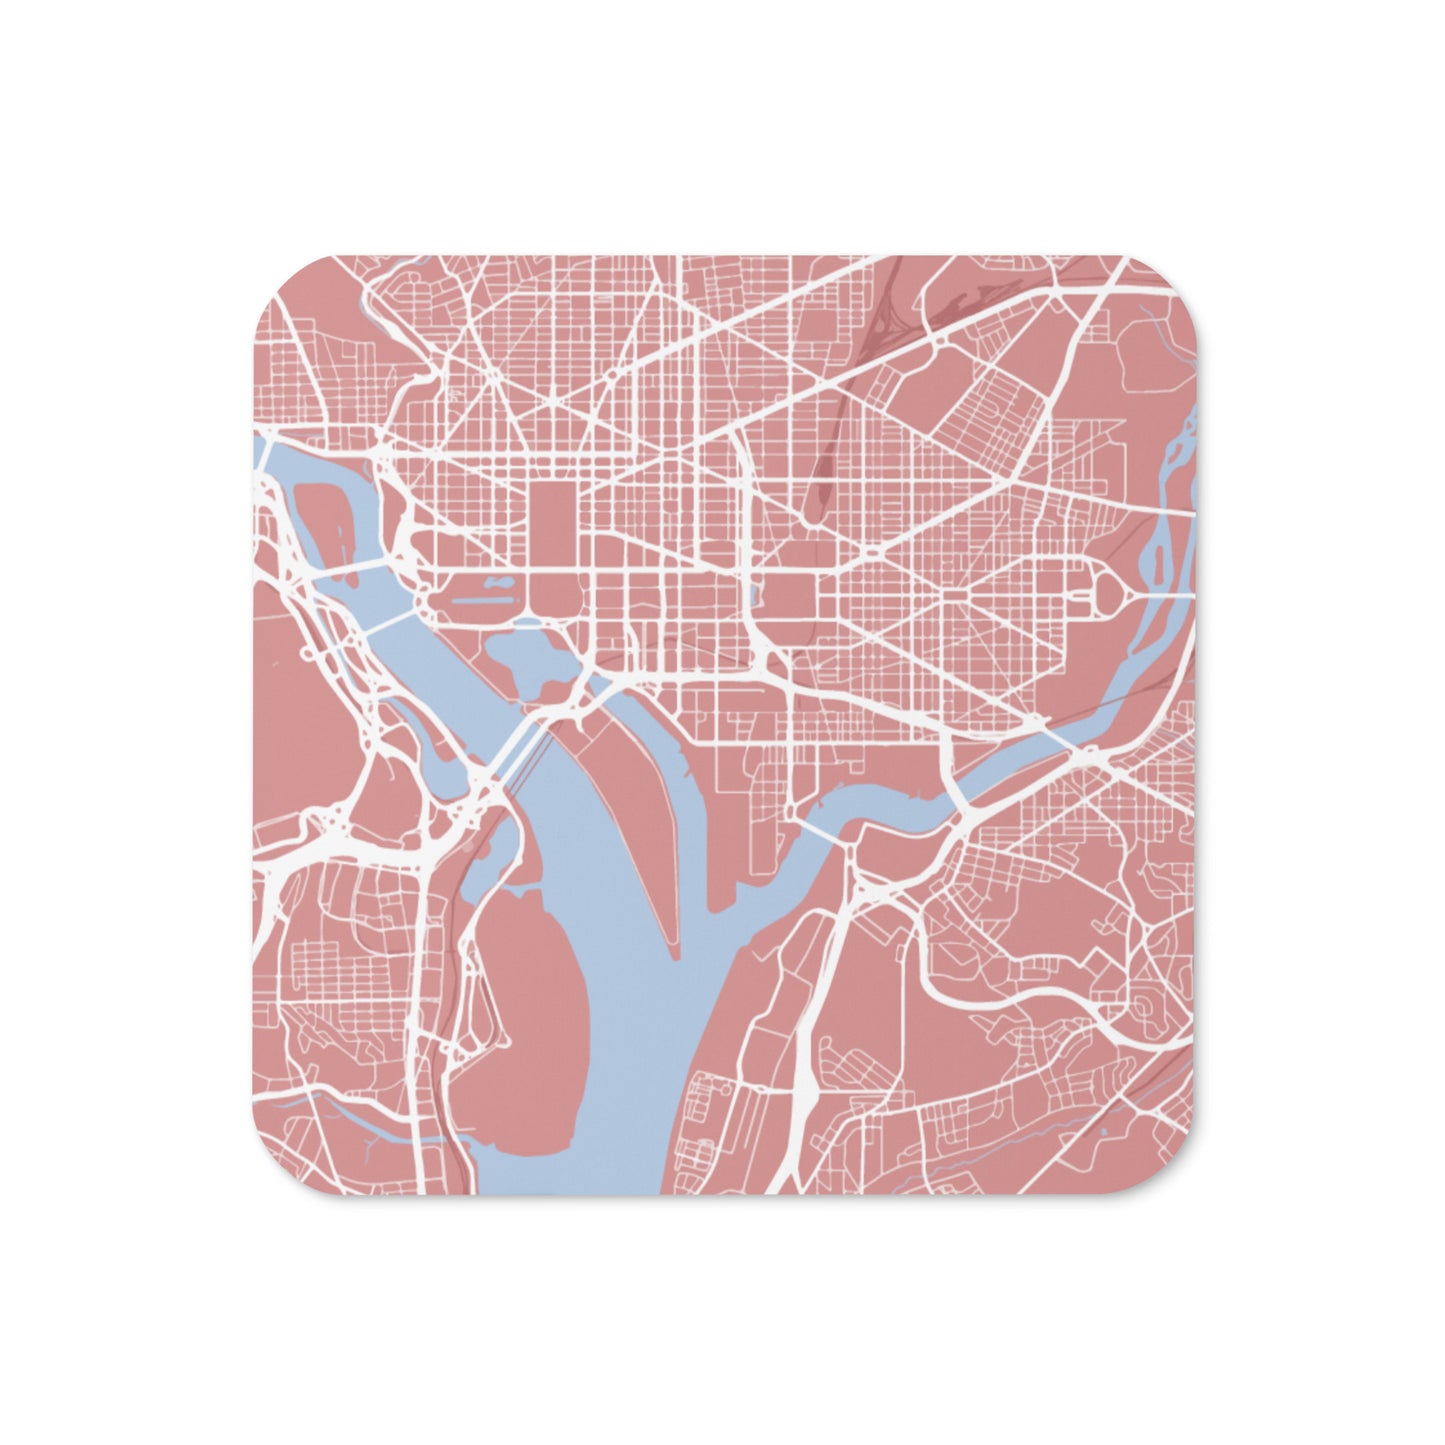 Map of Washington DC, USA - Cork-back coaster